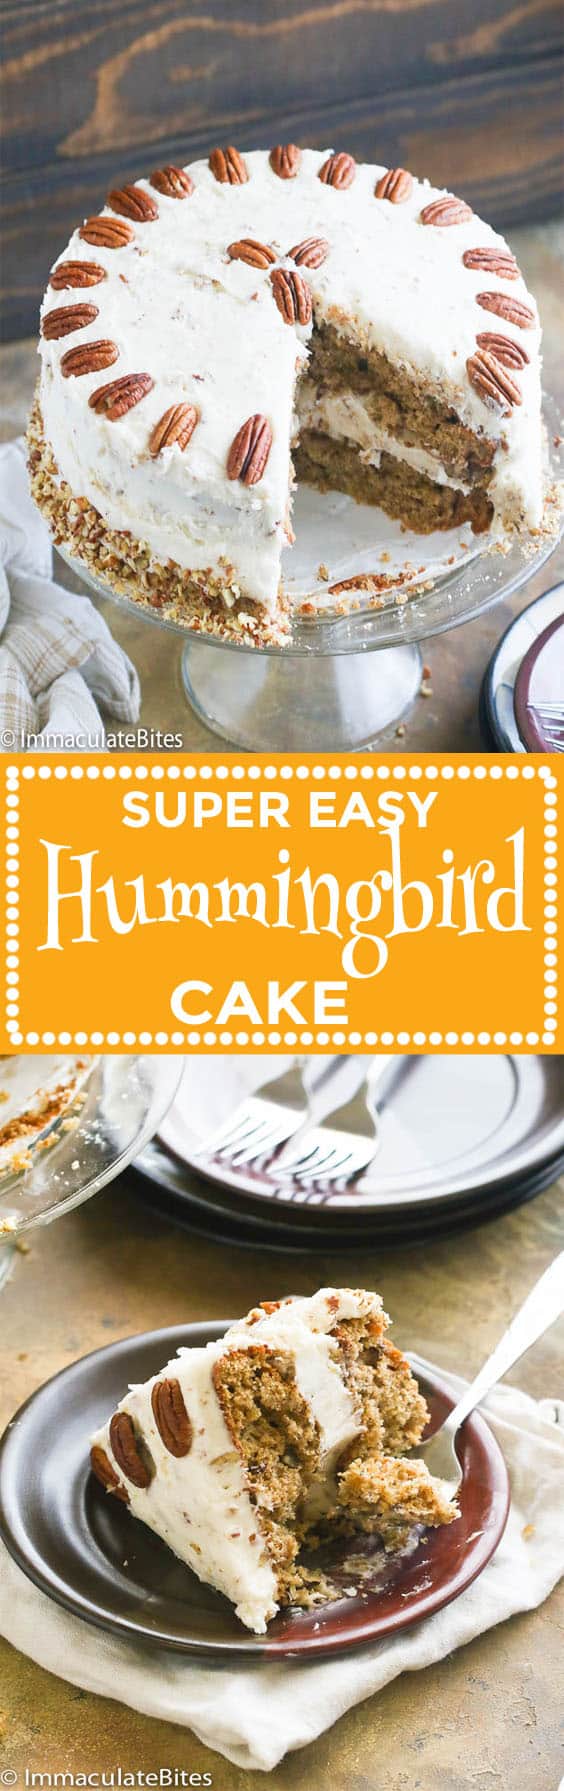 hummingbird cake